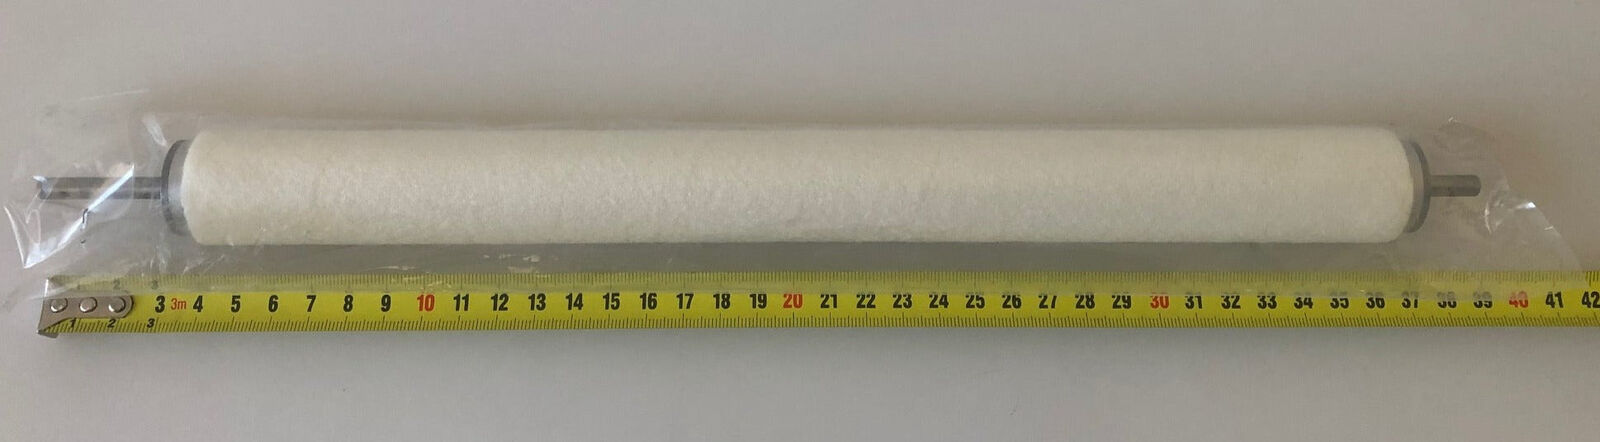 Printer roller length 39.5 cm / width 2.5 cm / one holder length 2 cm / another